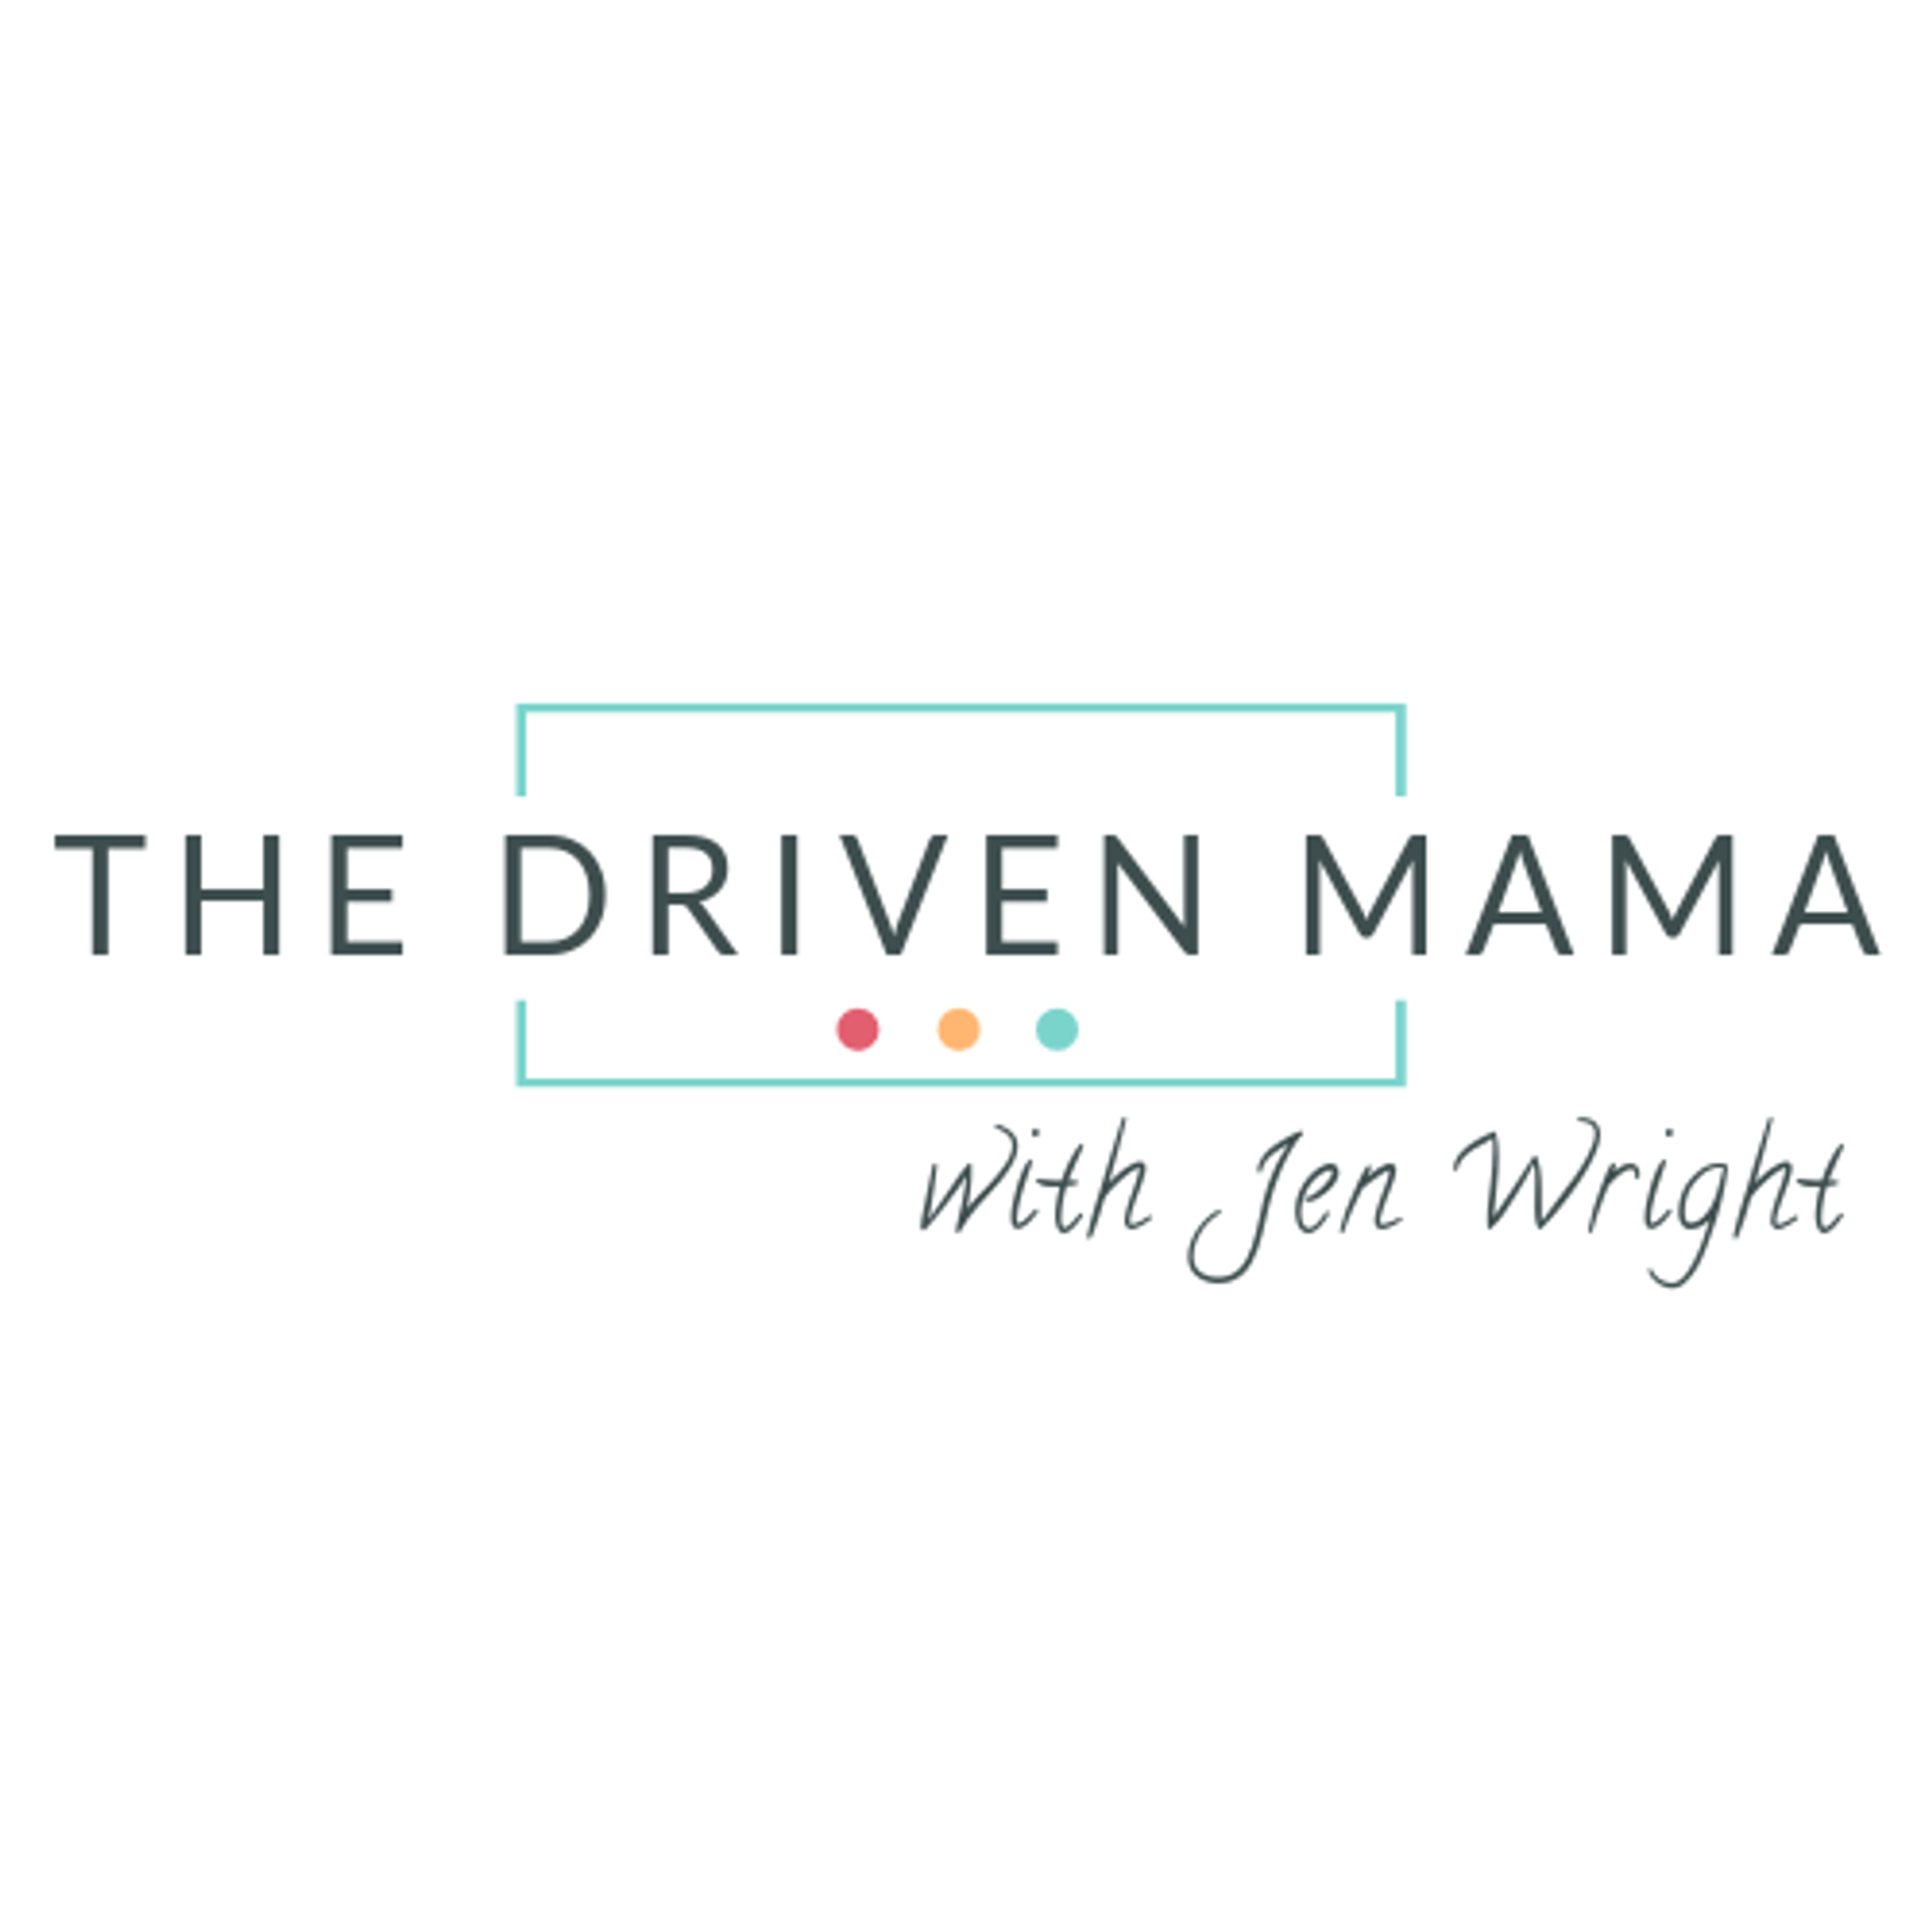 The Driven Mama LLC